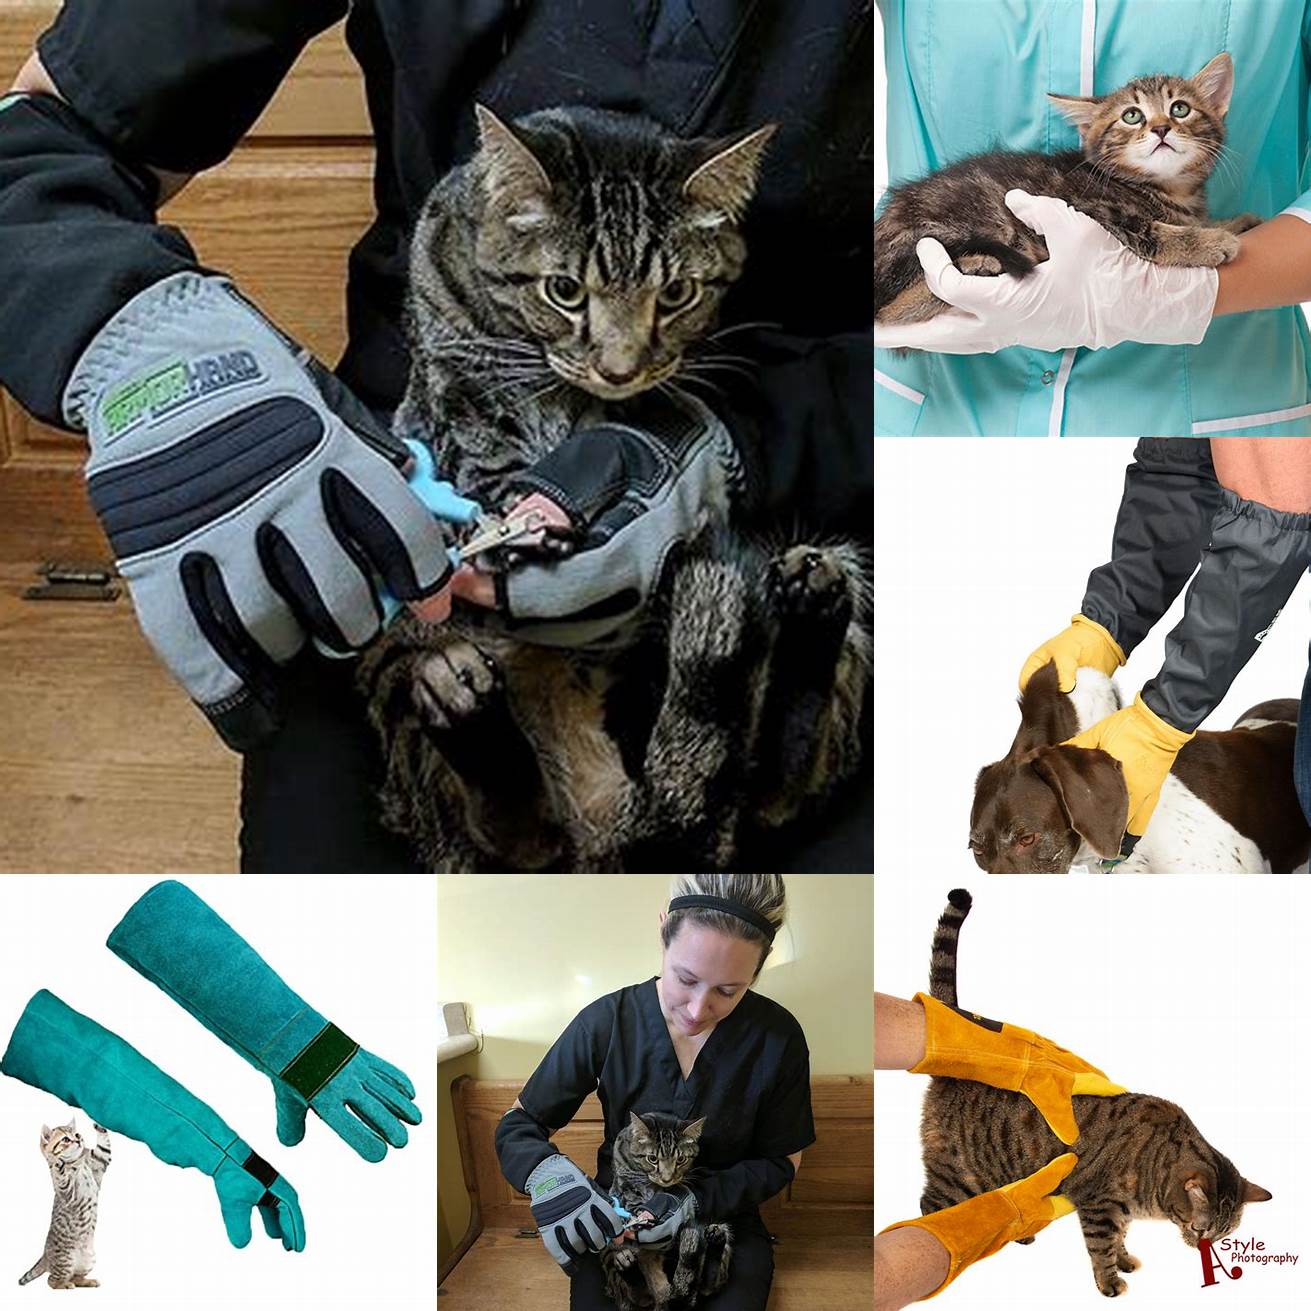 2 Wear gloves when handling the animal